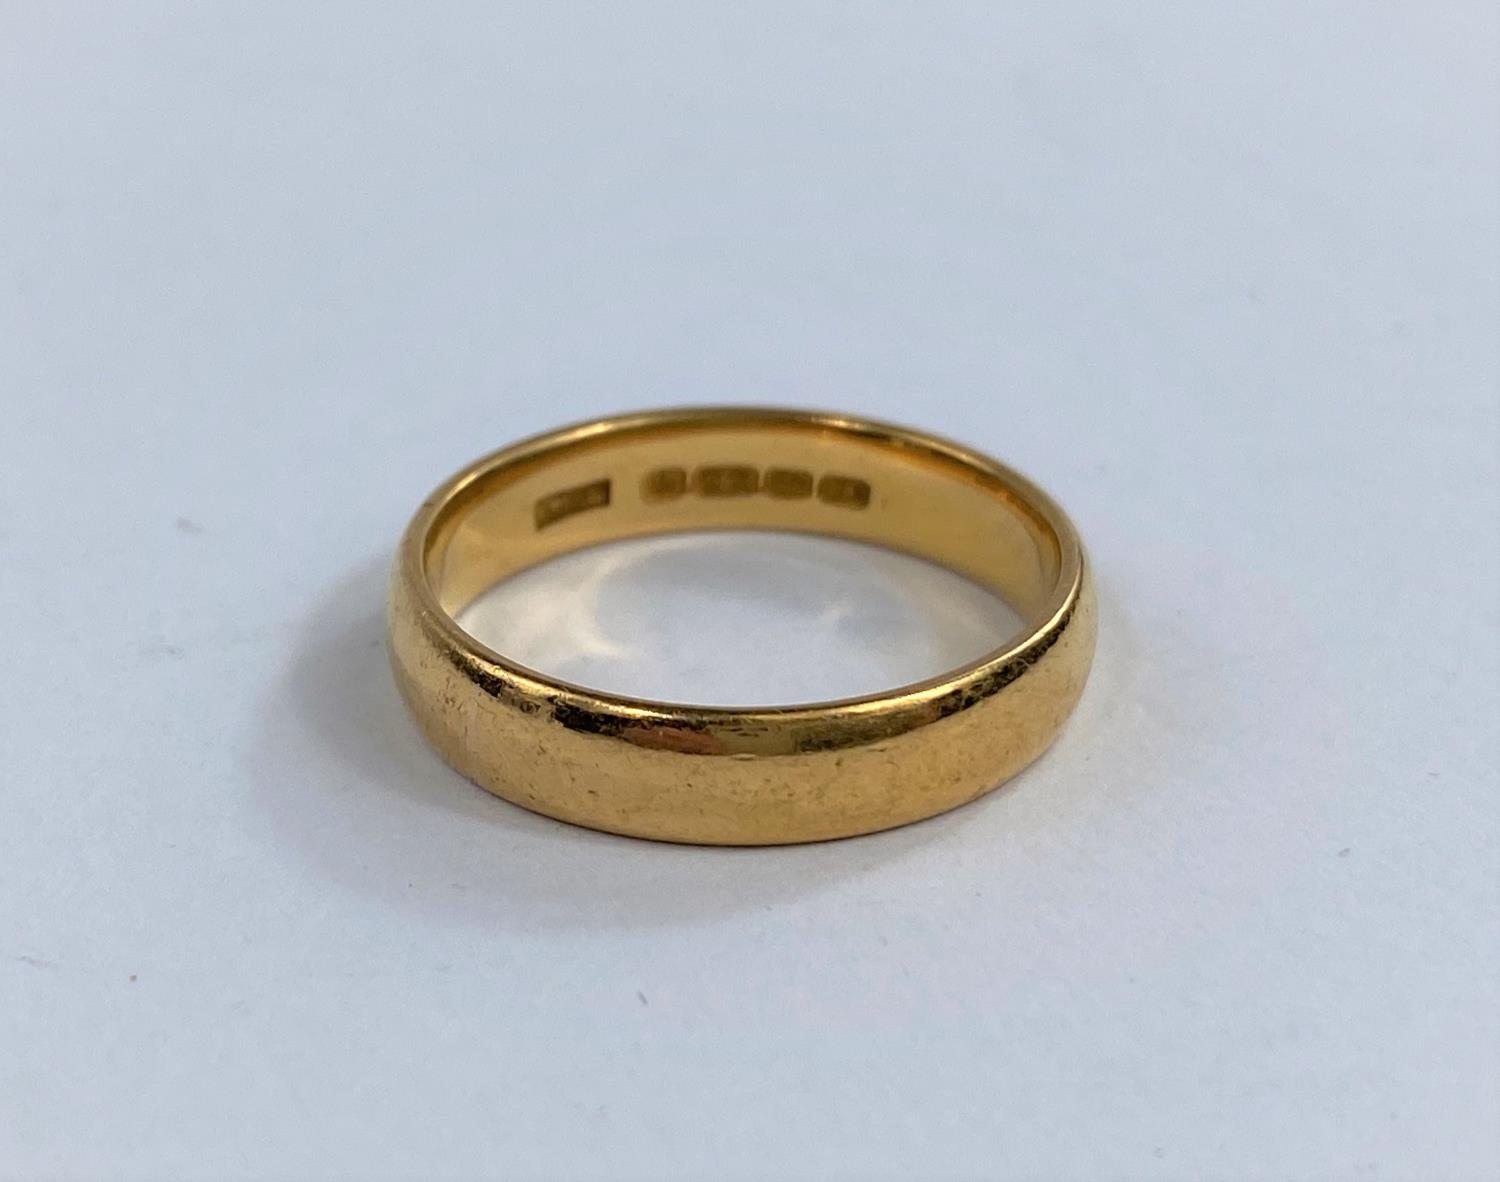 A 22 ct gold hallmarked wedding ring 5.1gm size N